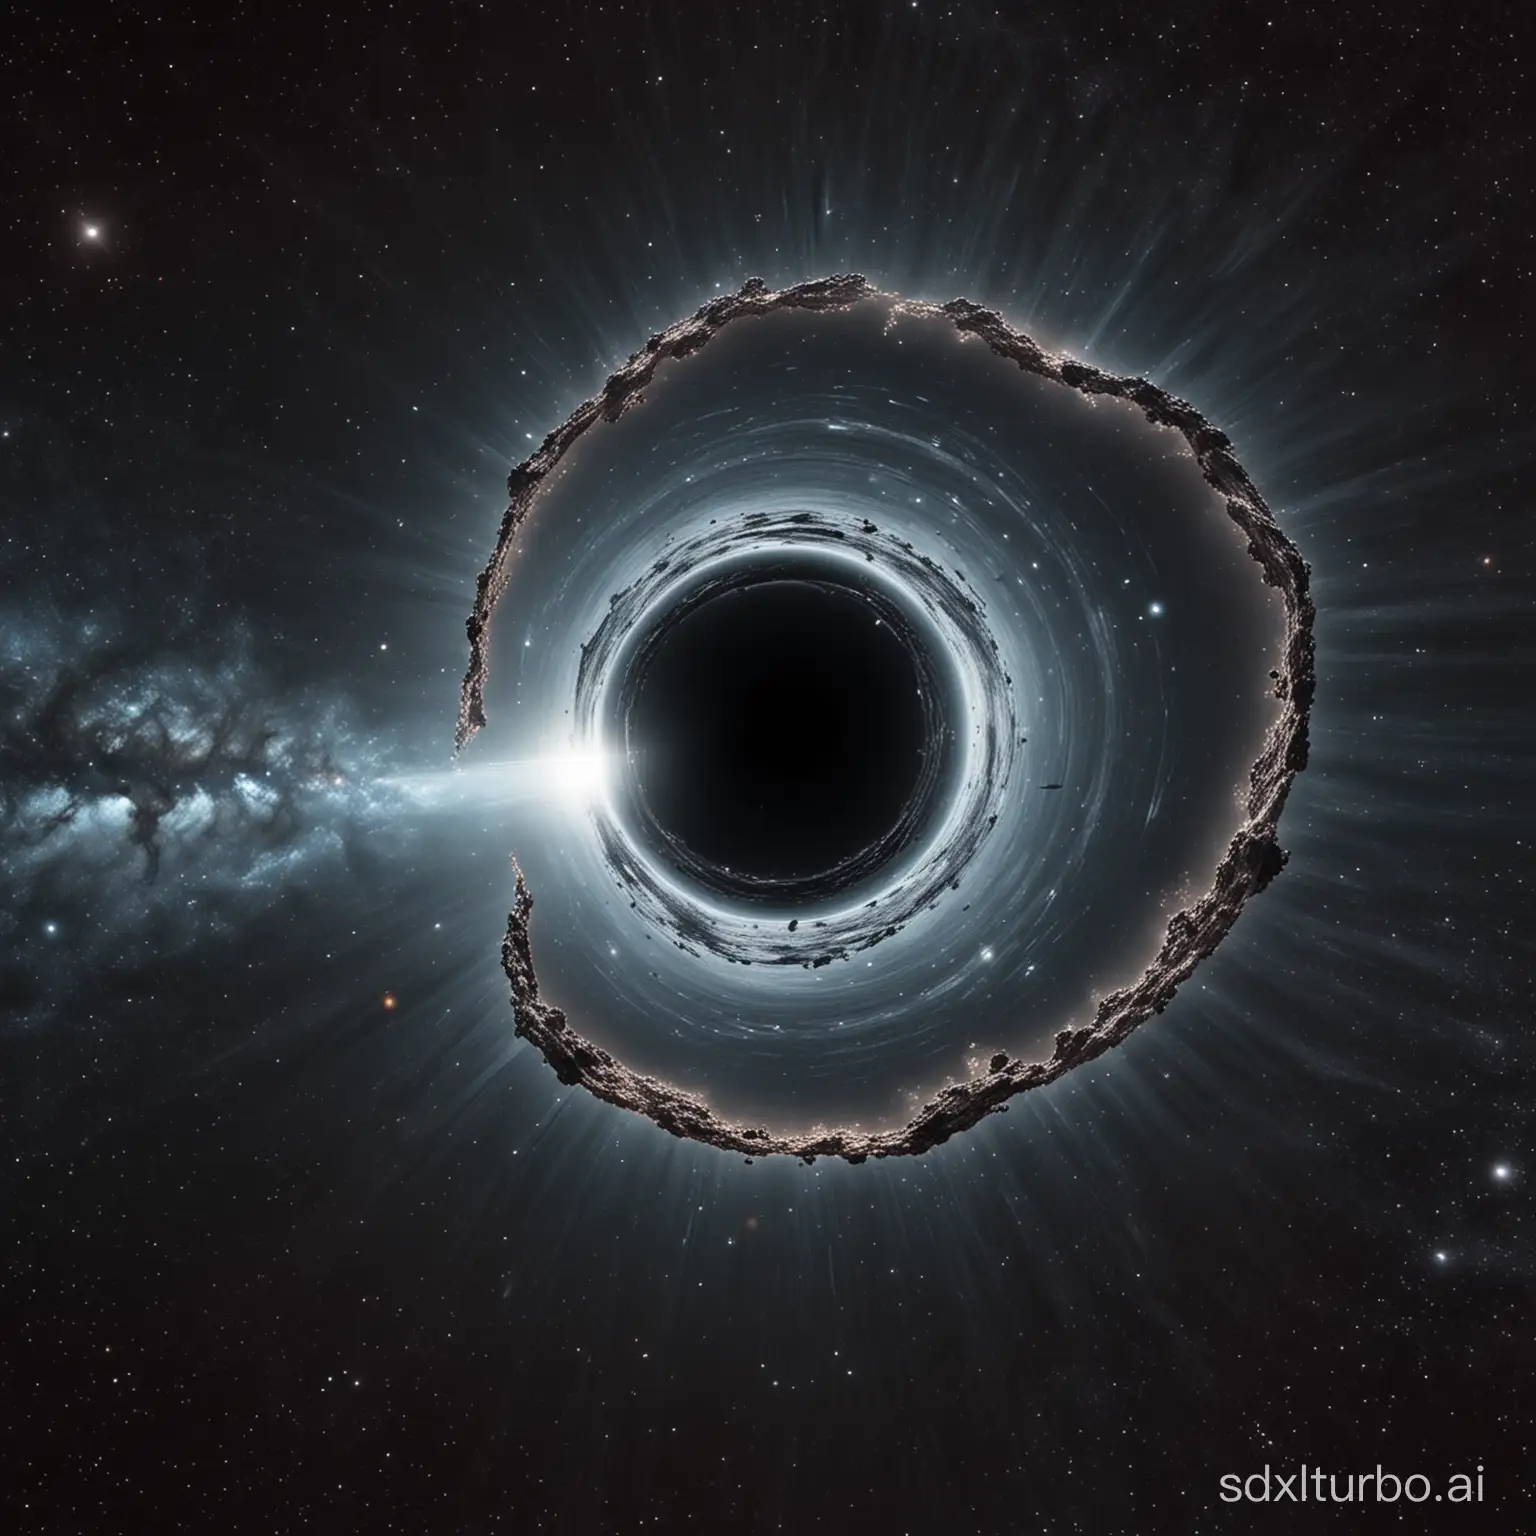 Spaceship and a blackhole interstellar like look